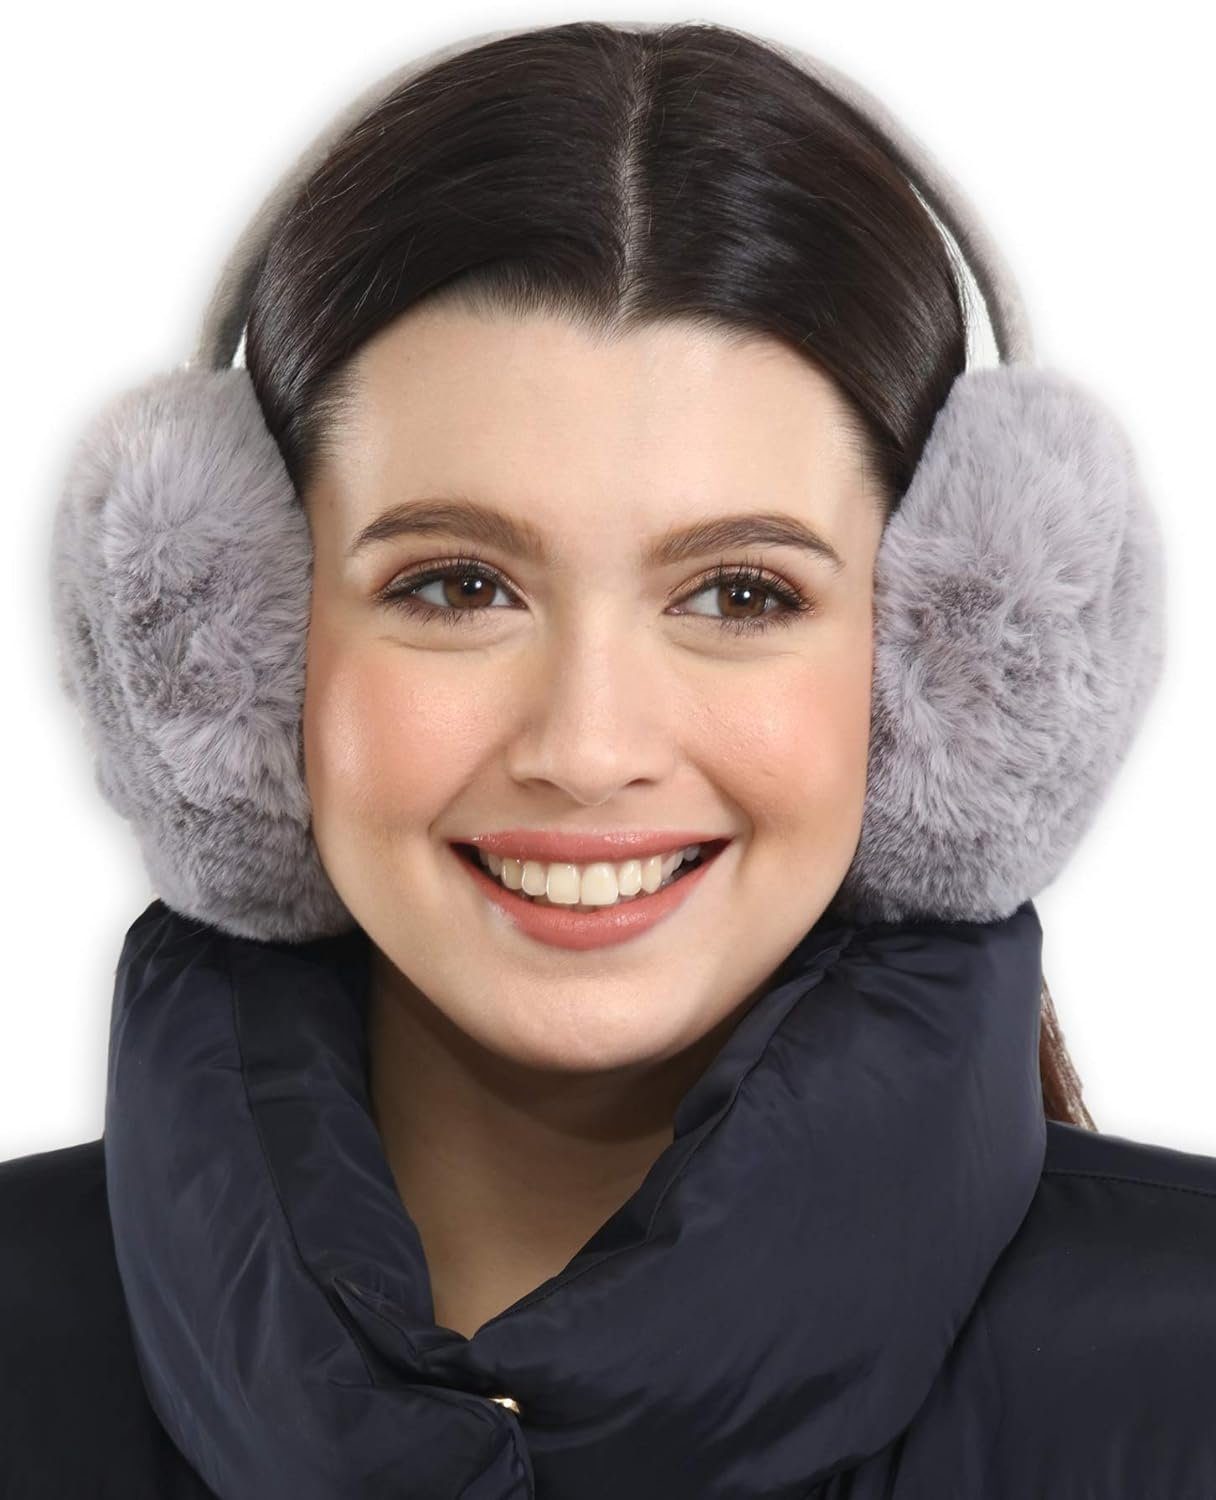 Opspring Ohrenwärmer Ohrenschützer,Winter-Ohrenwärmer,Ohrenschützer für kaltes Wetter Grau | Ohrenmützen